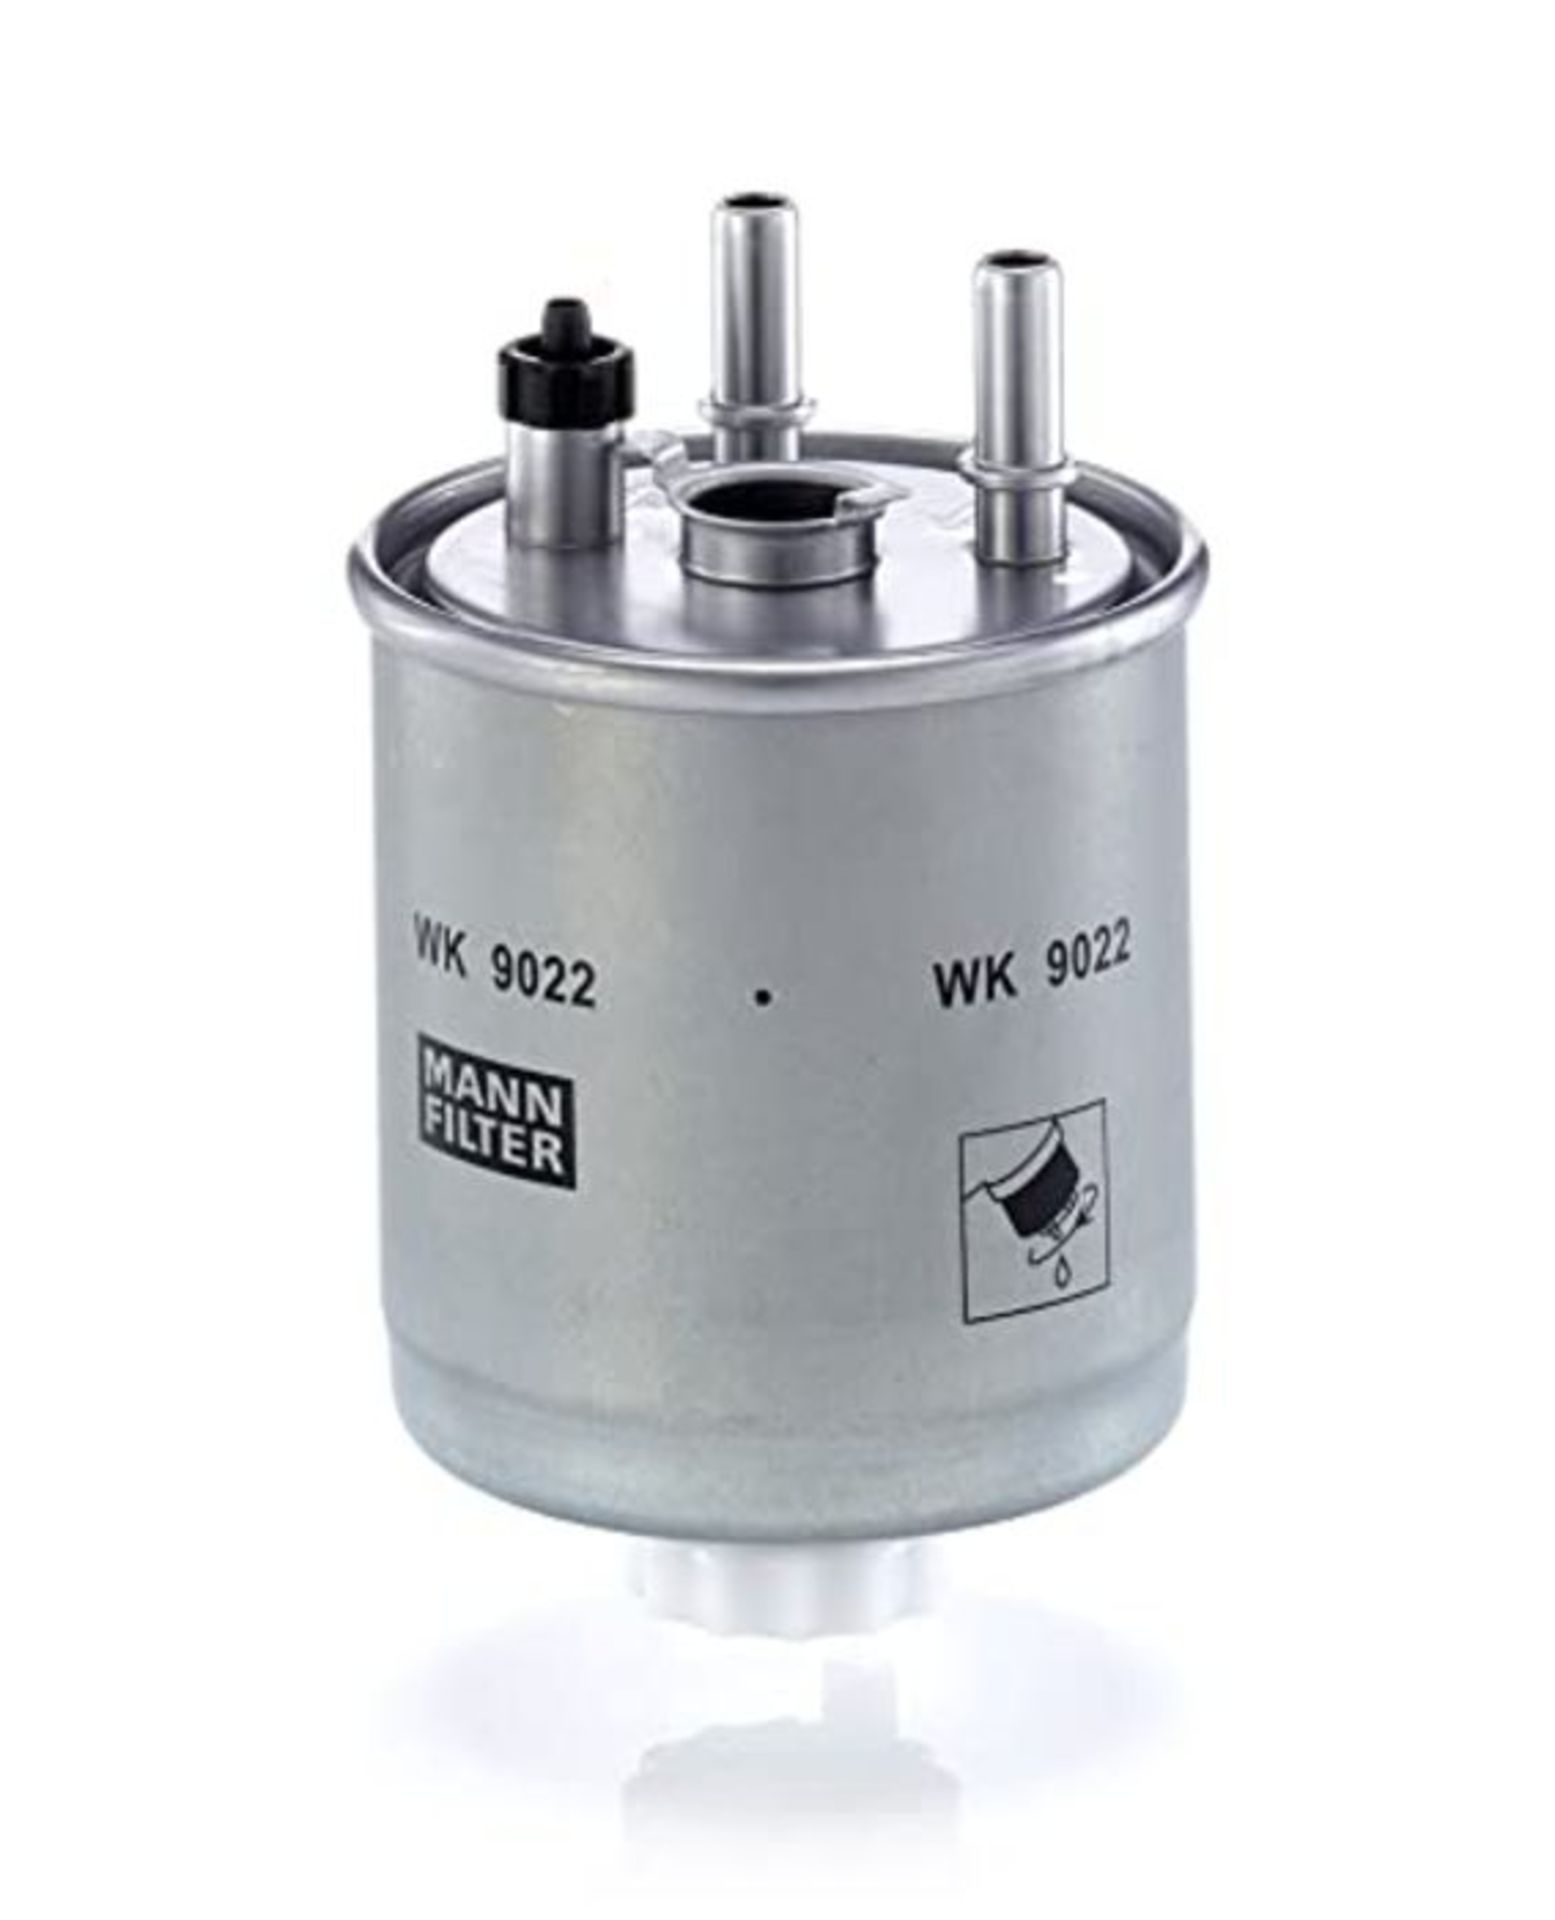 Original MANN-FILTER Fuel filter WK 9022 - For Passenger Cars